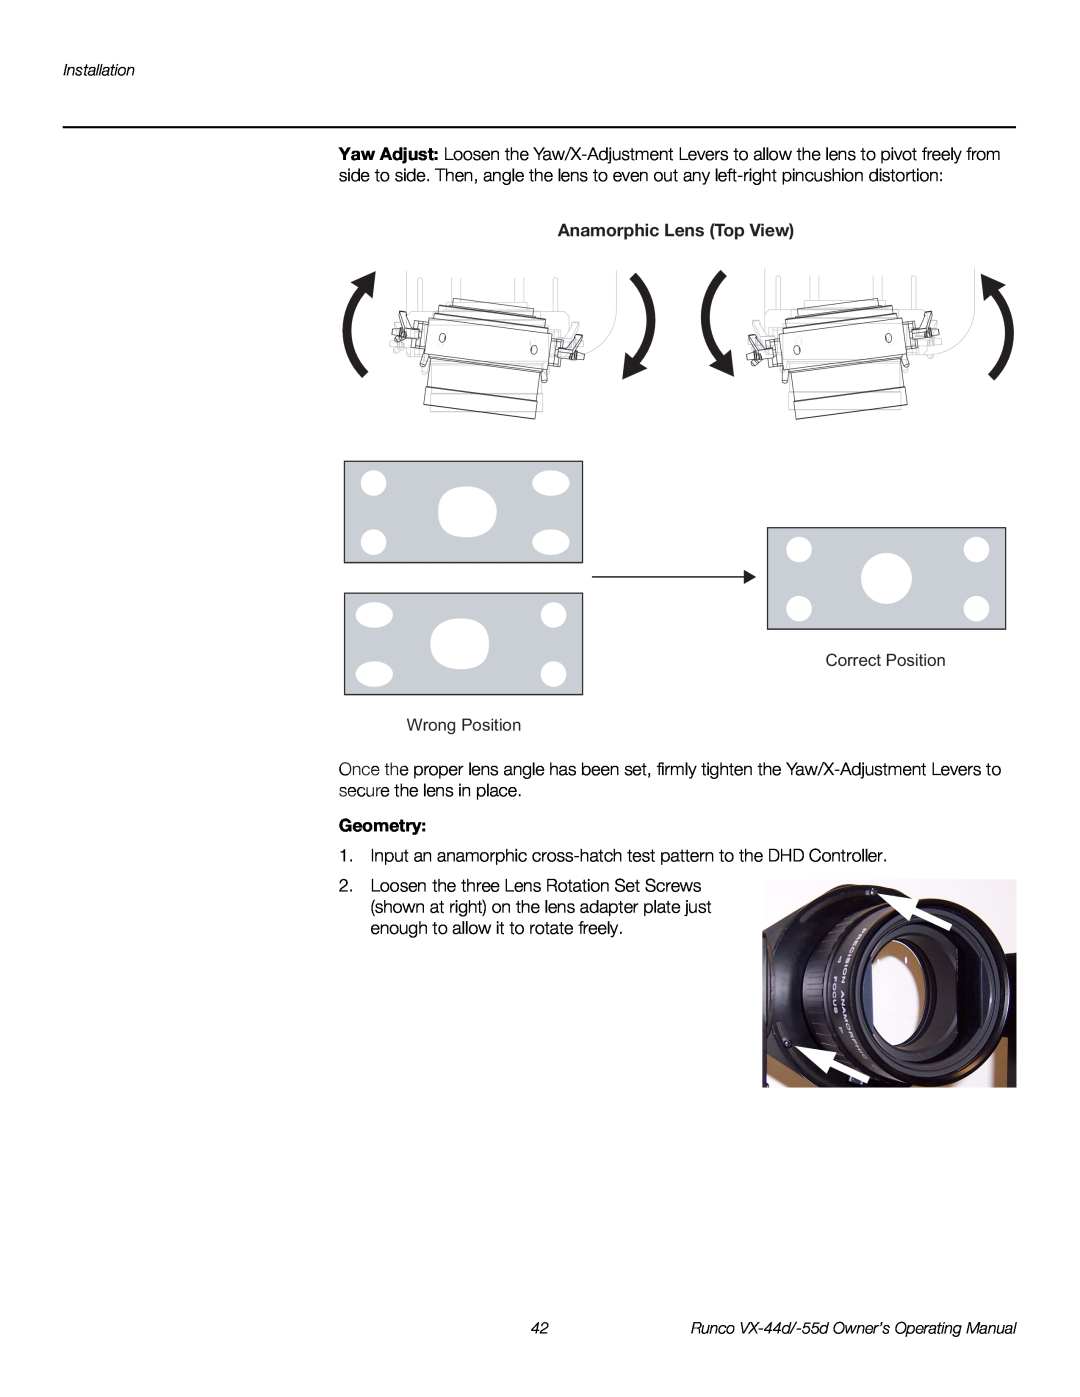 Runco VX-44D, VX-55D manual Anamorphic Lens Top View, Geometry 